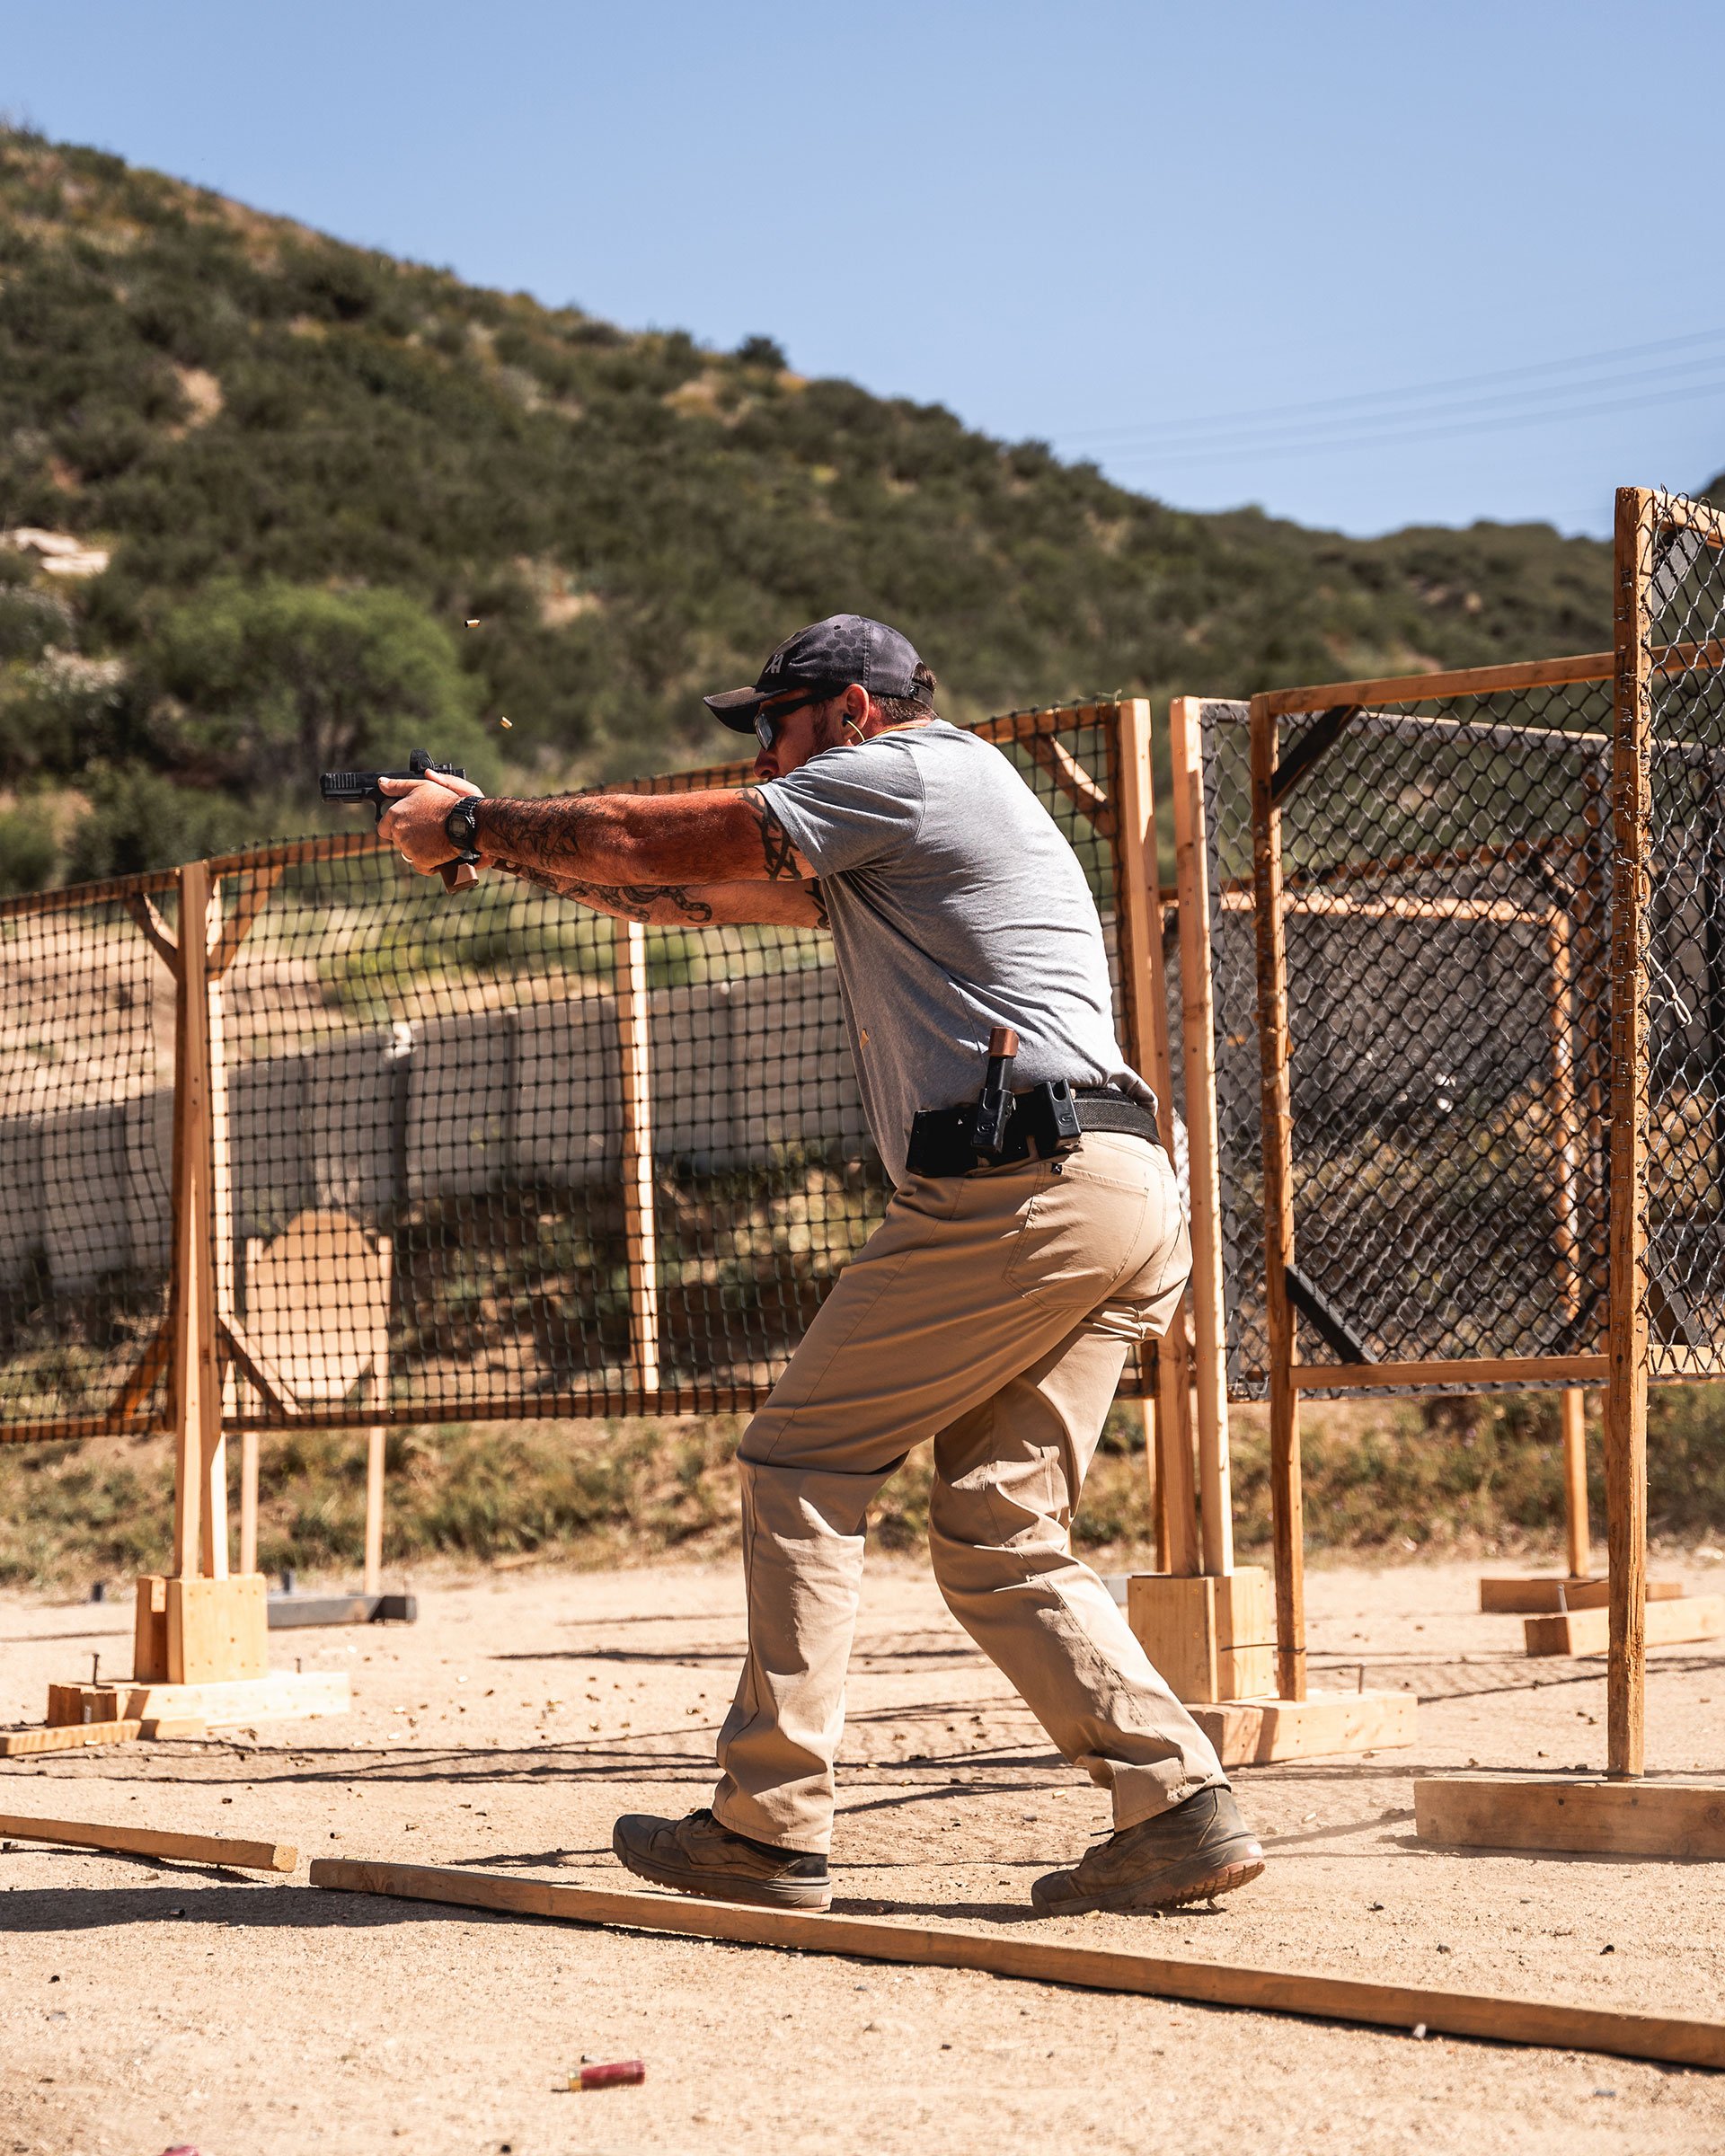 Matt Pranka encourages Practical Shooting for all shooters